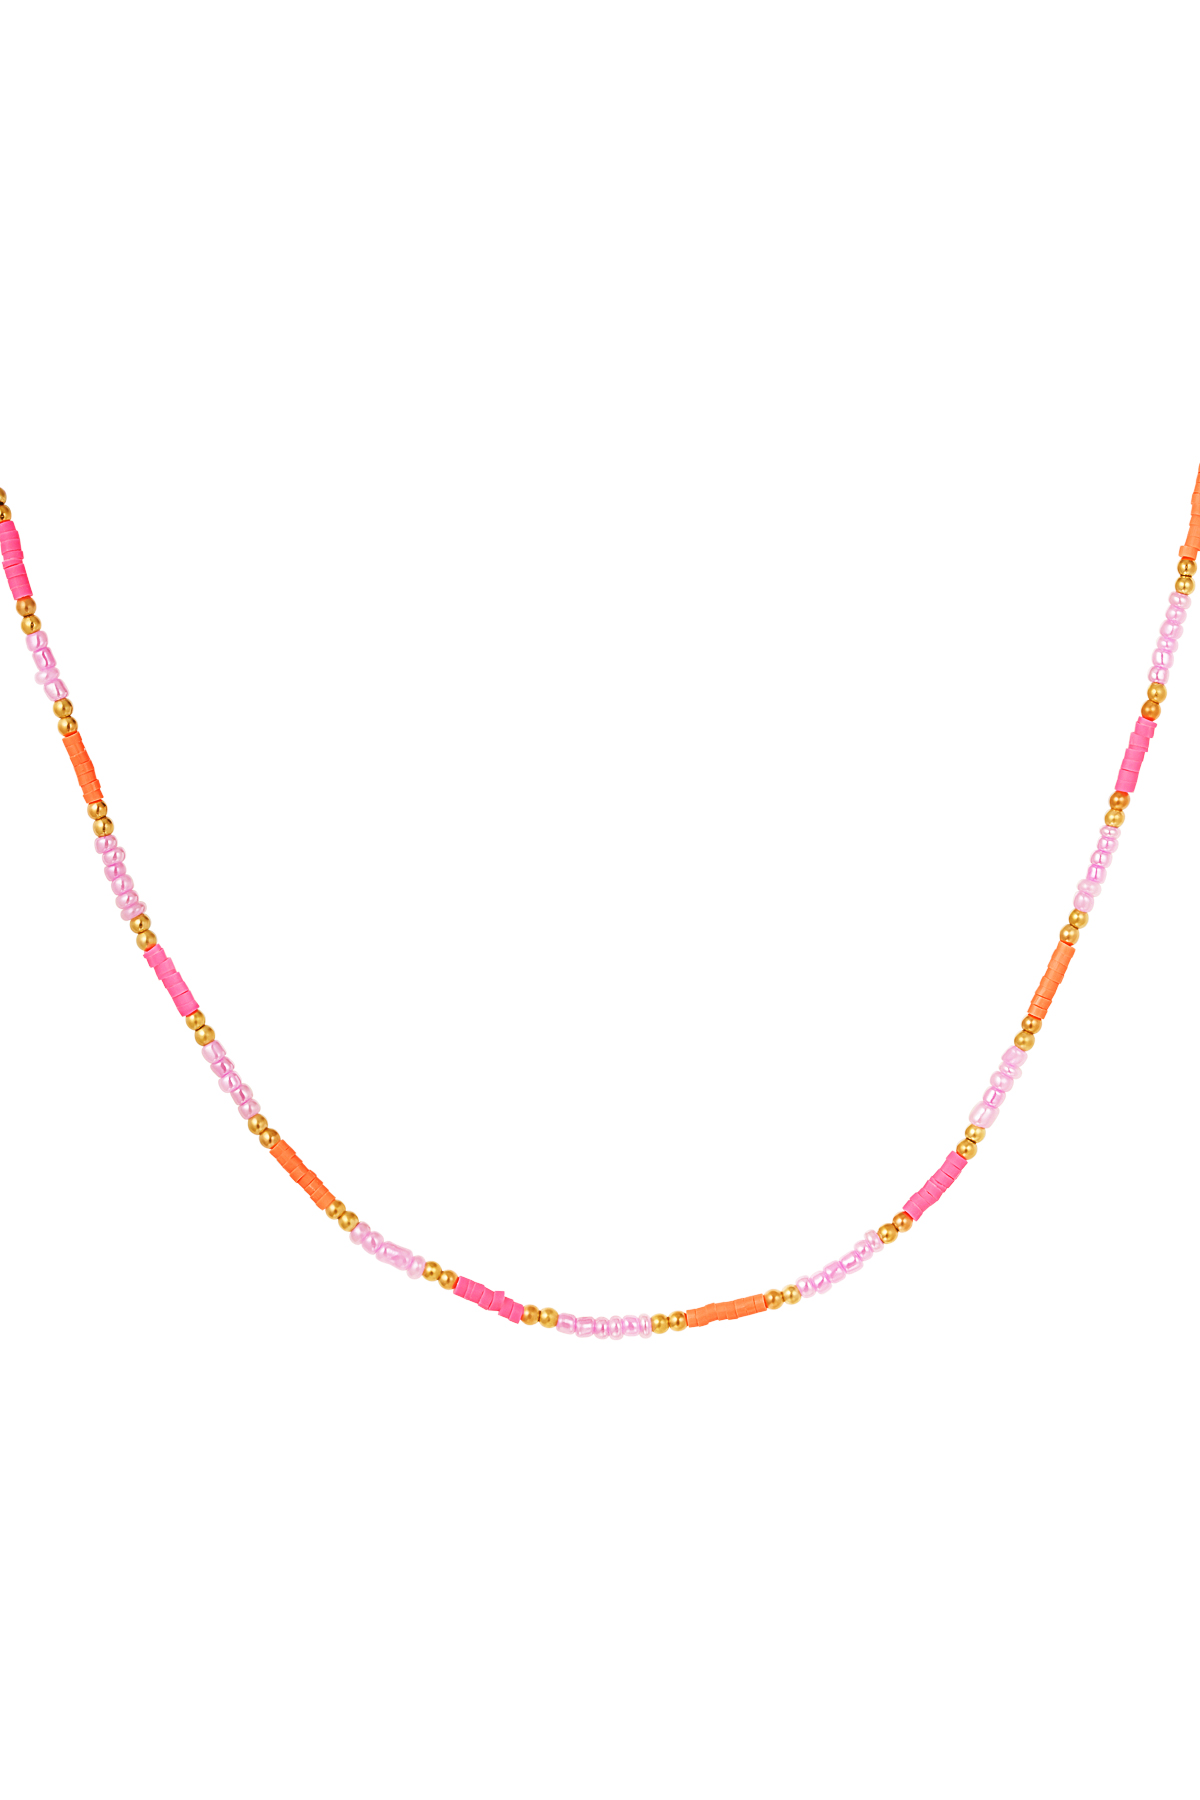 Ketting kleine kleurrijke kraaltjes - roze/oranje